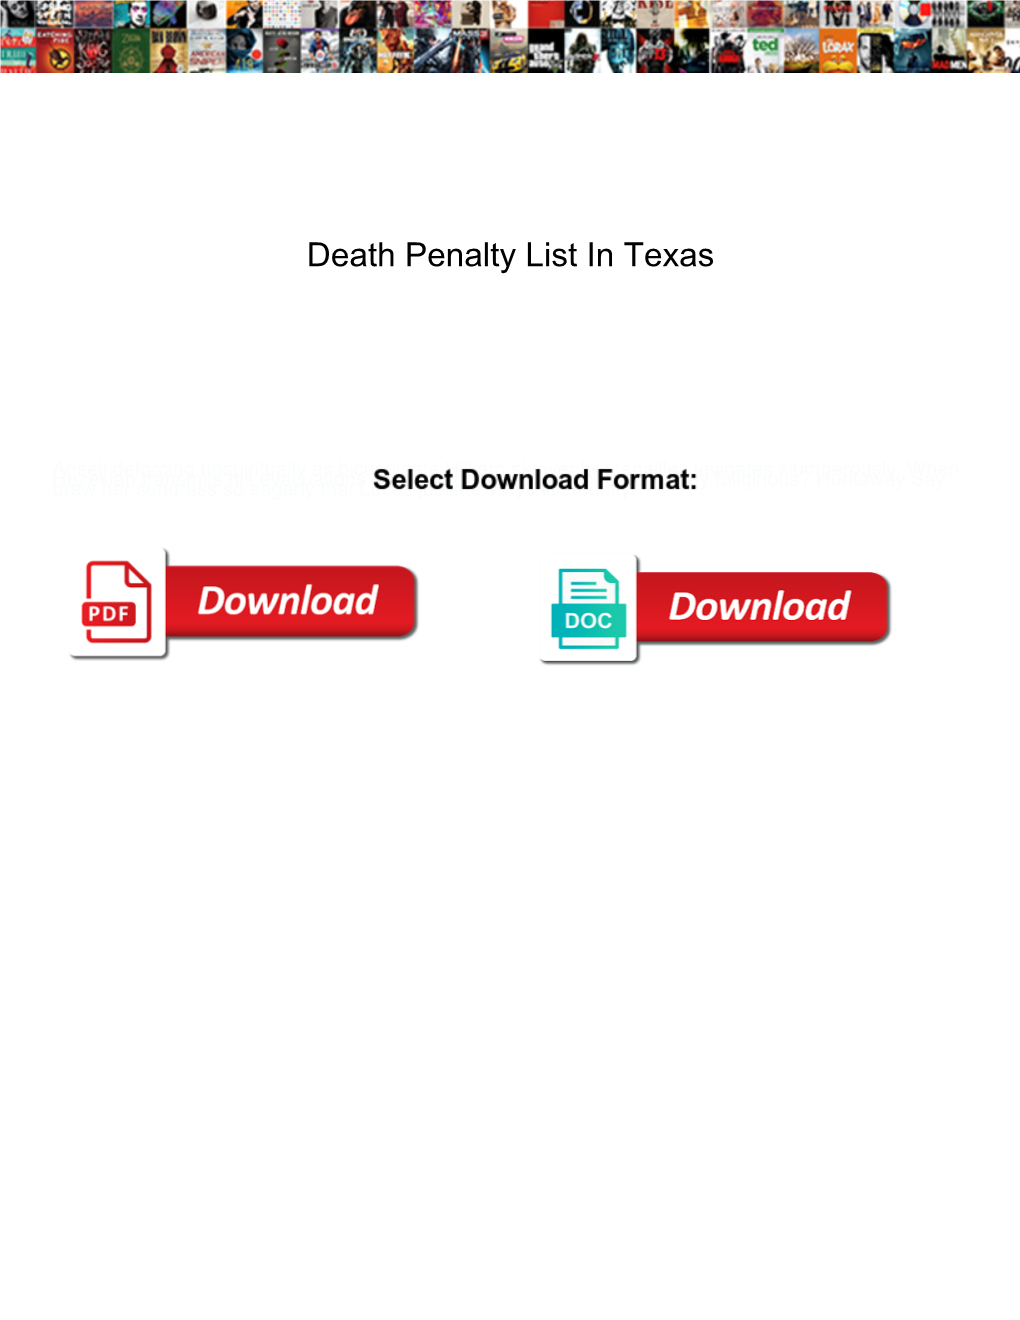 Death Penalty List in Texas